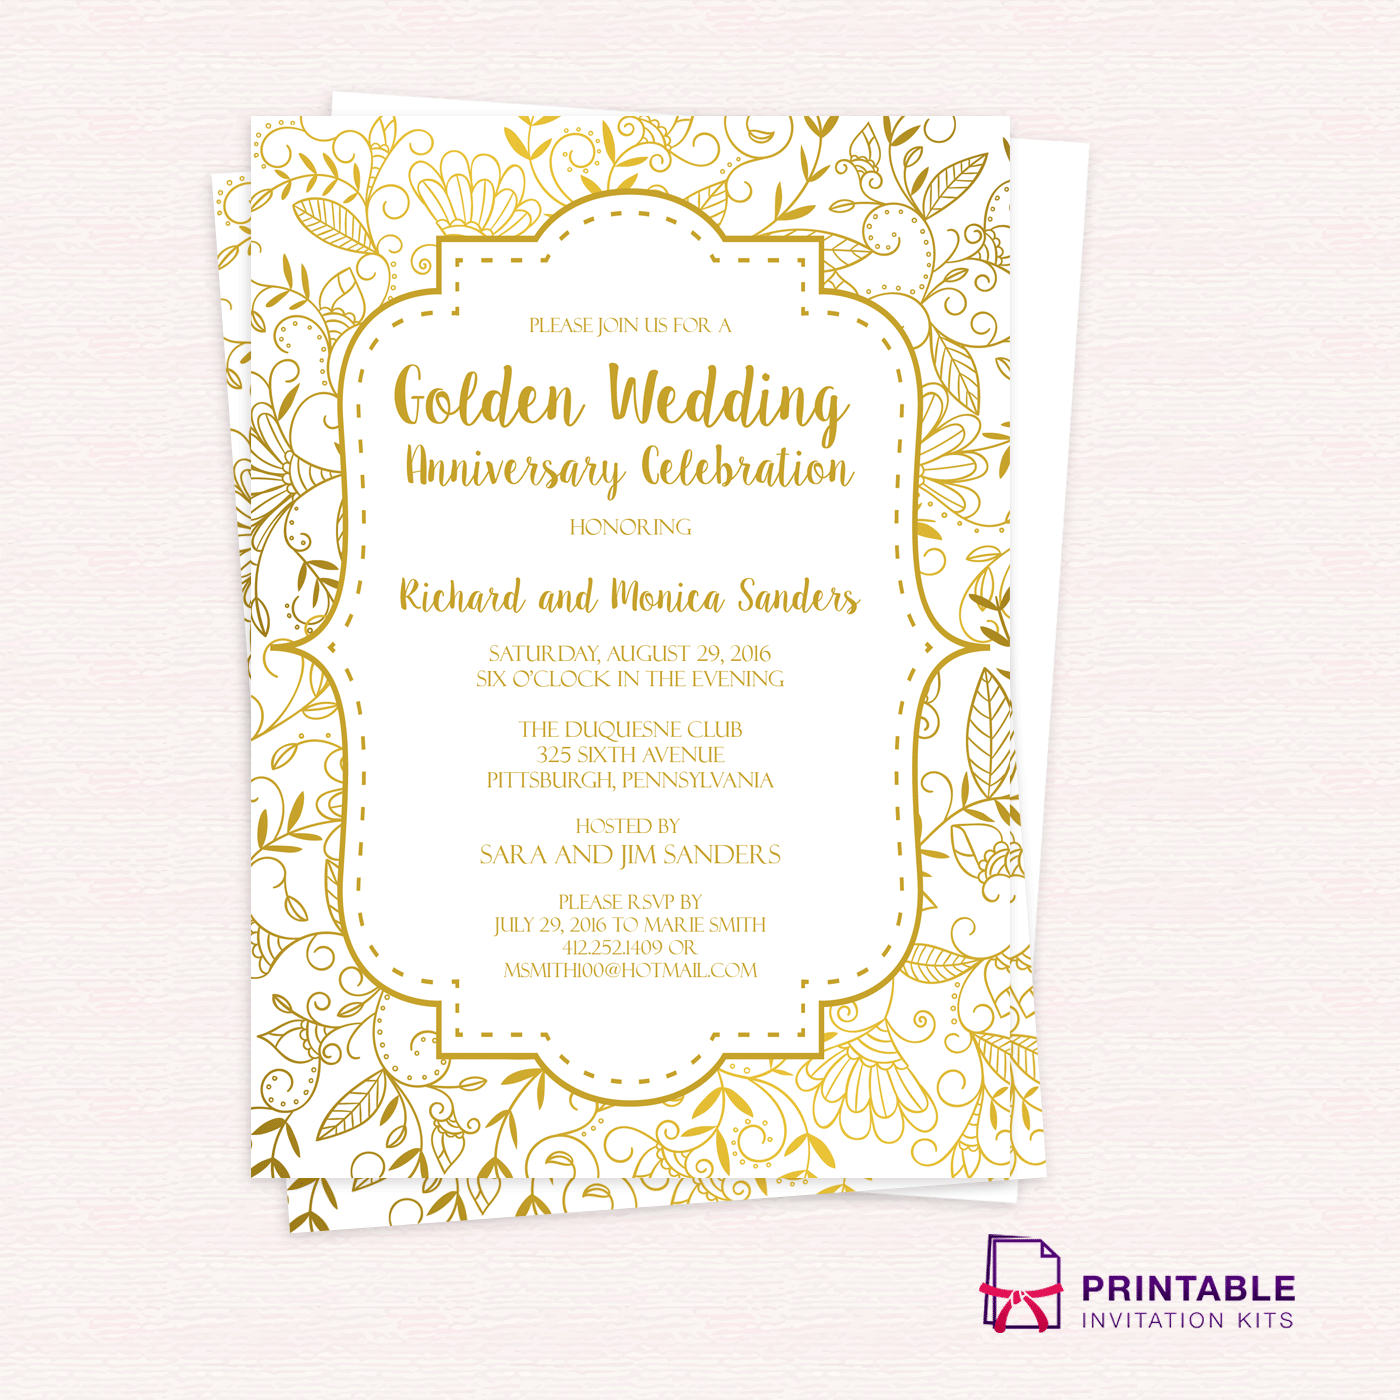 Golden Wedding Anniversary Invitation Template Wedding Invitation in dimensions 1400 X 1400